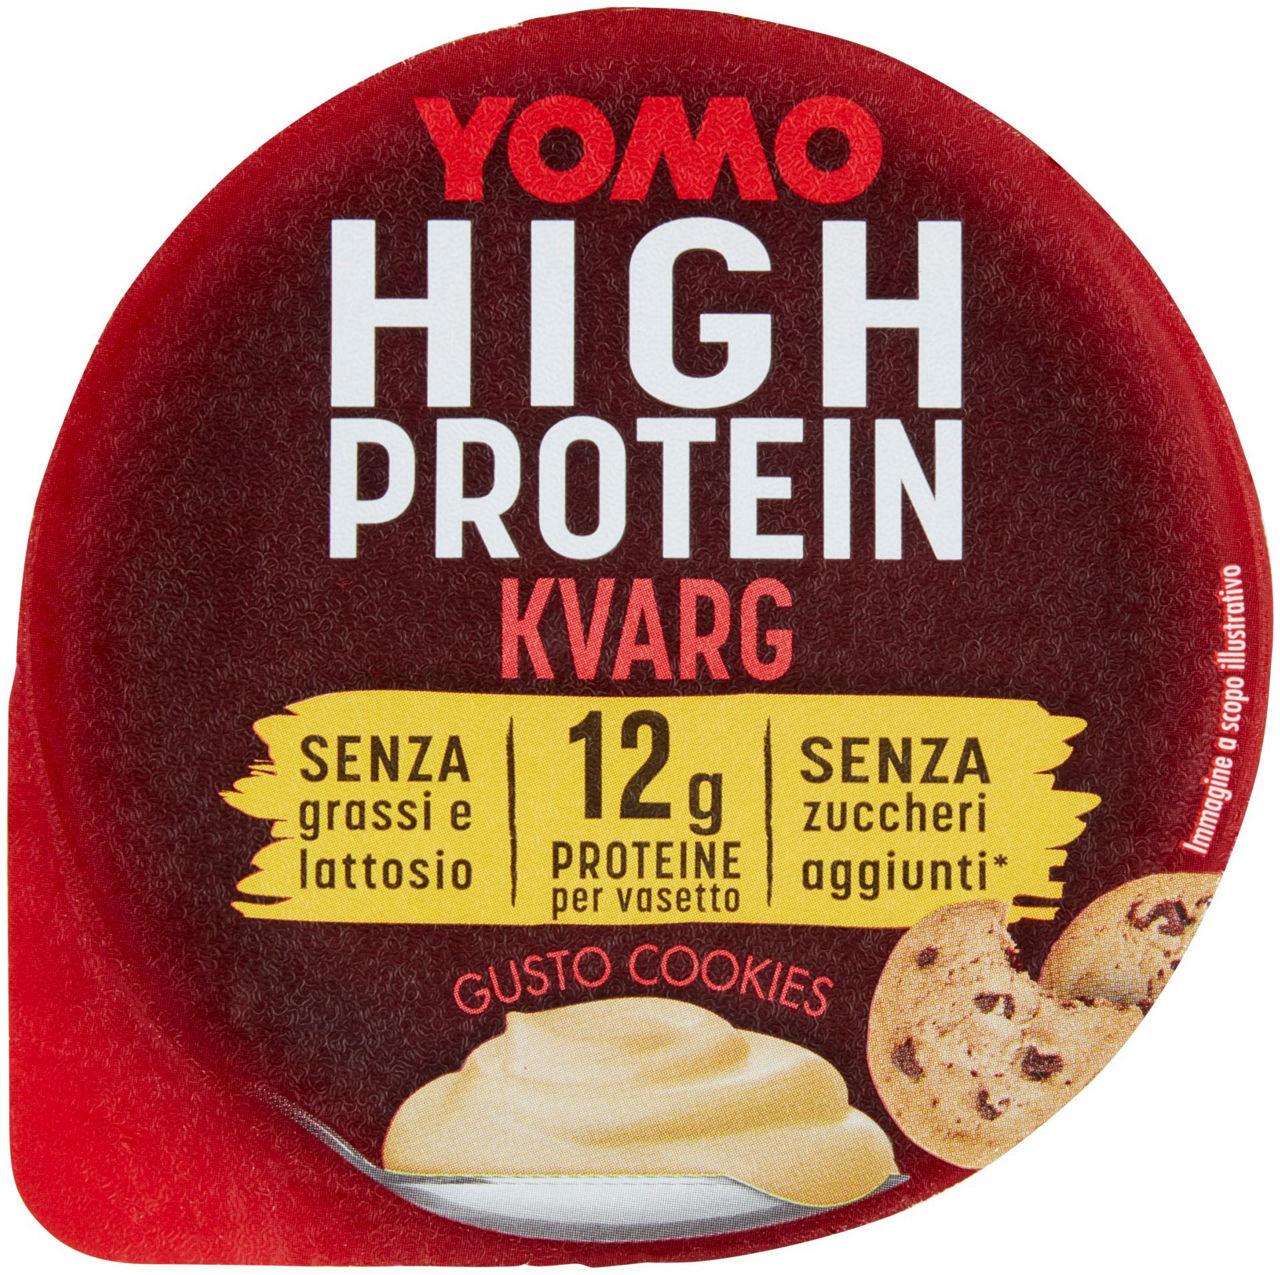 YOMO HIGH PROTEIN KVARG COOKIES G 140 - 0